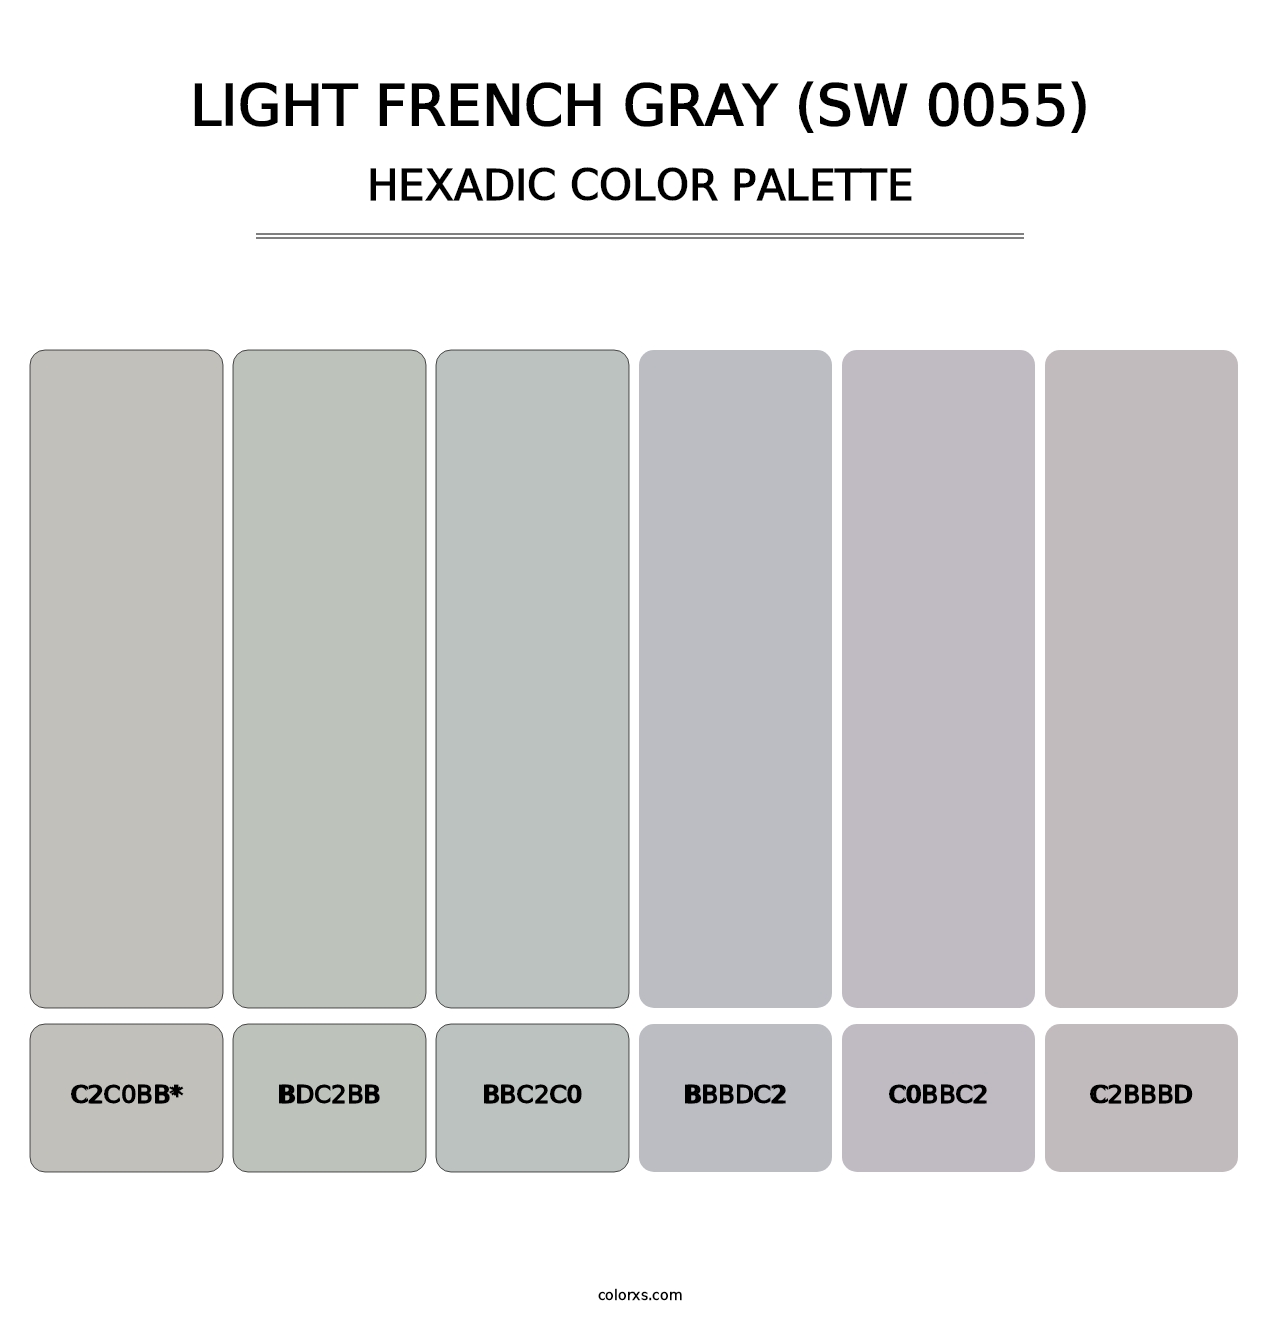 Light French Gray (SW 0055) - Hexadic Color Palette